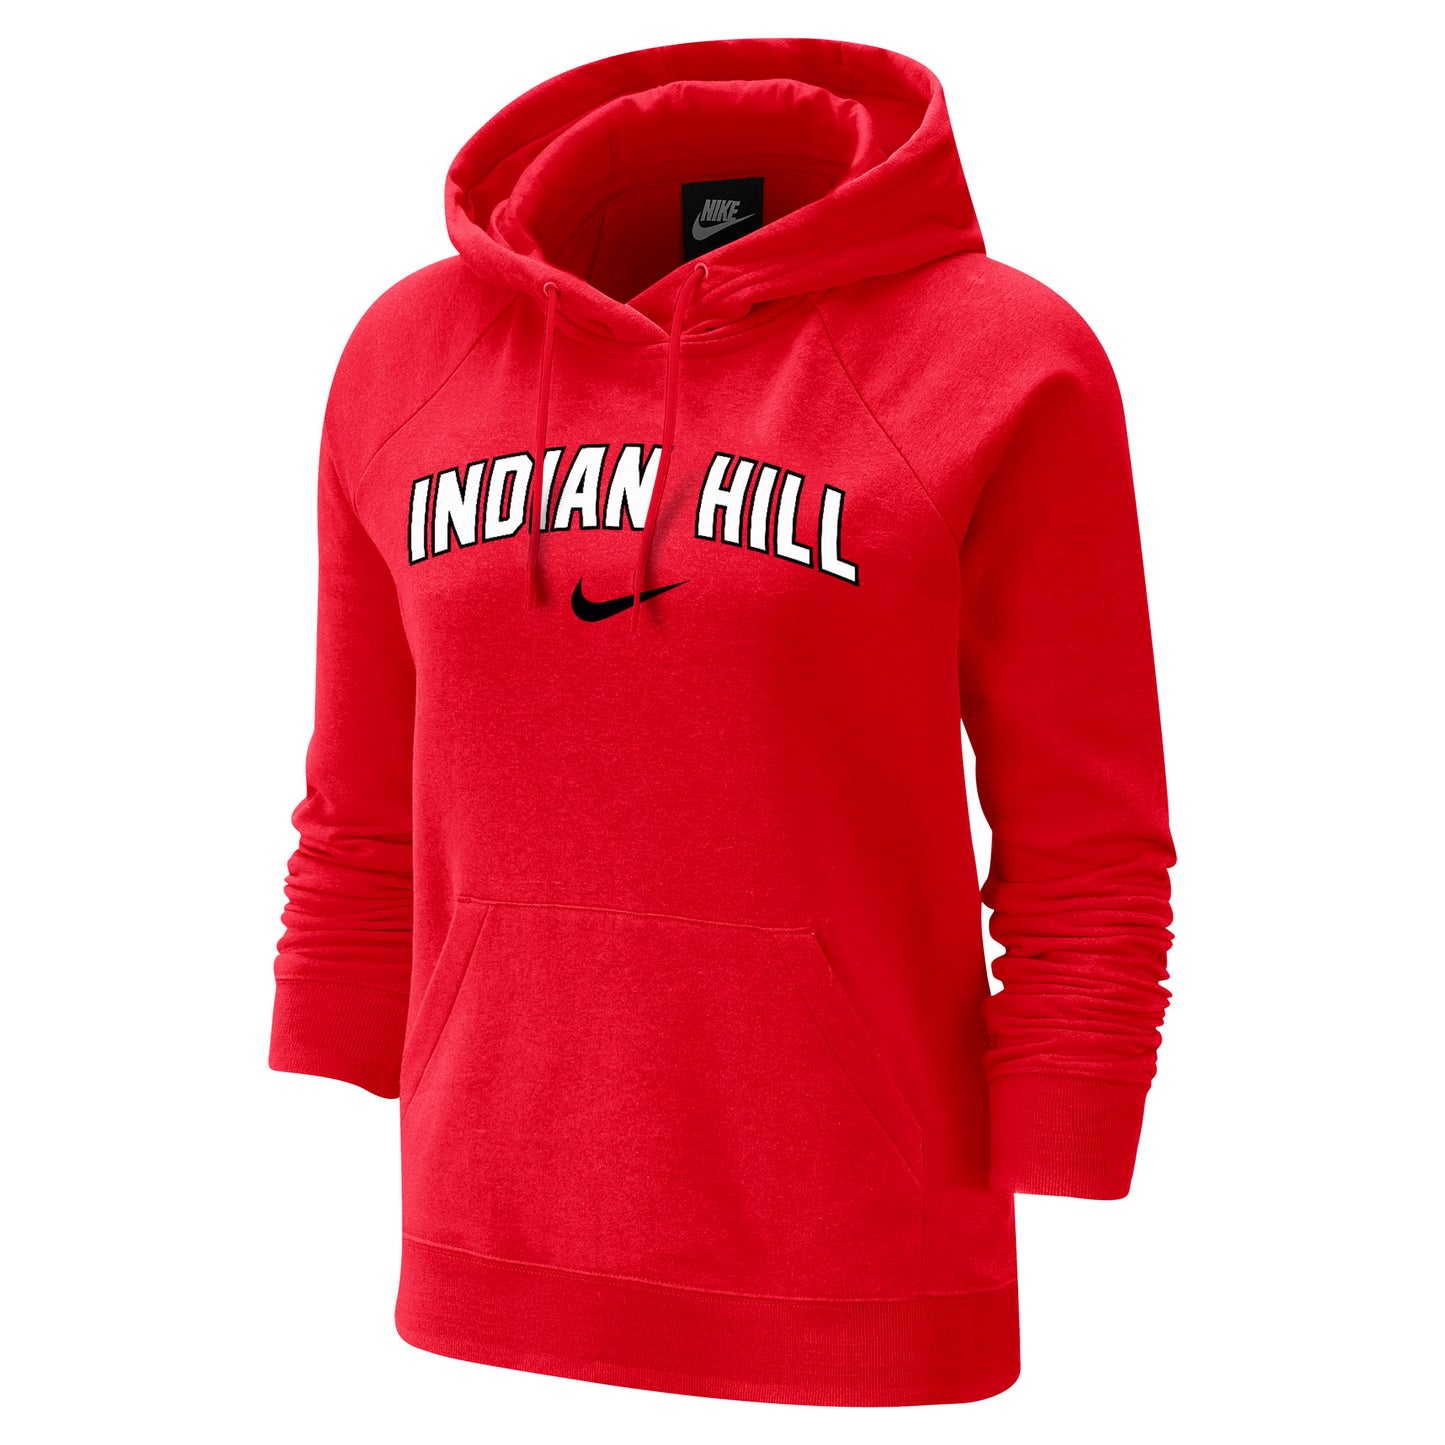 Nike Women's Indian Hill Hoodie